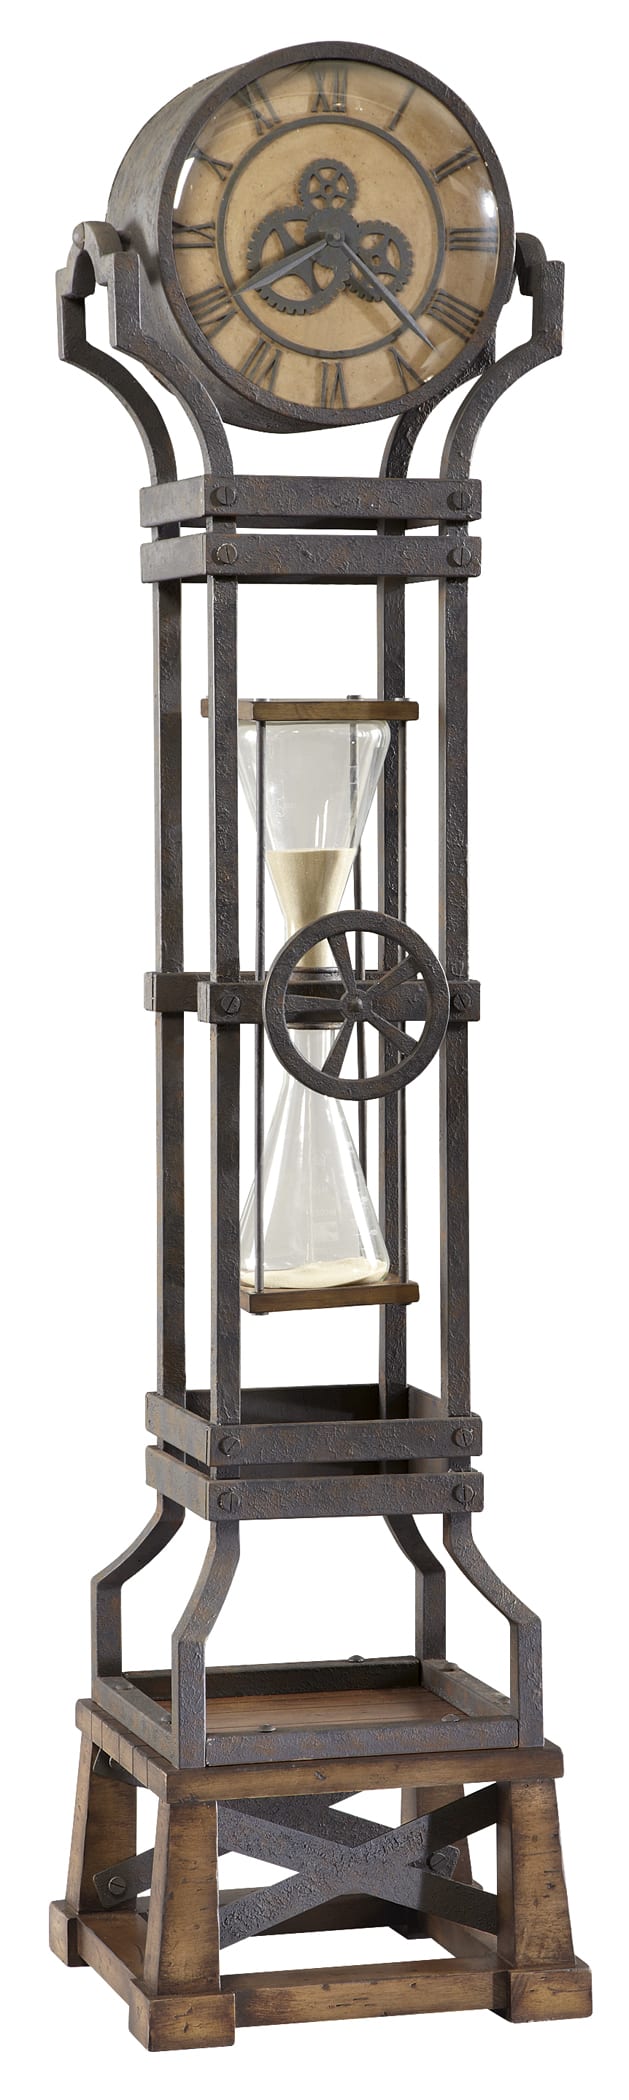 Howard Miller Hourglass Grandfather Clock 615074